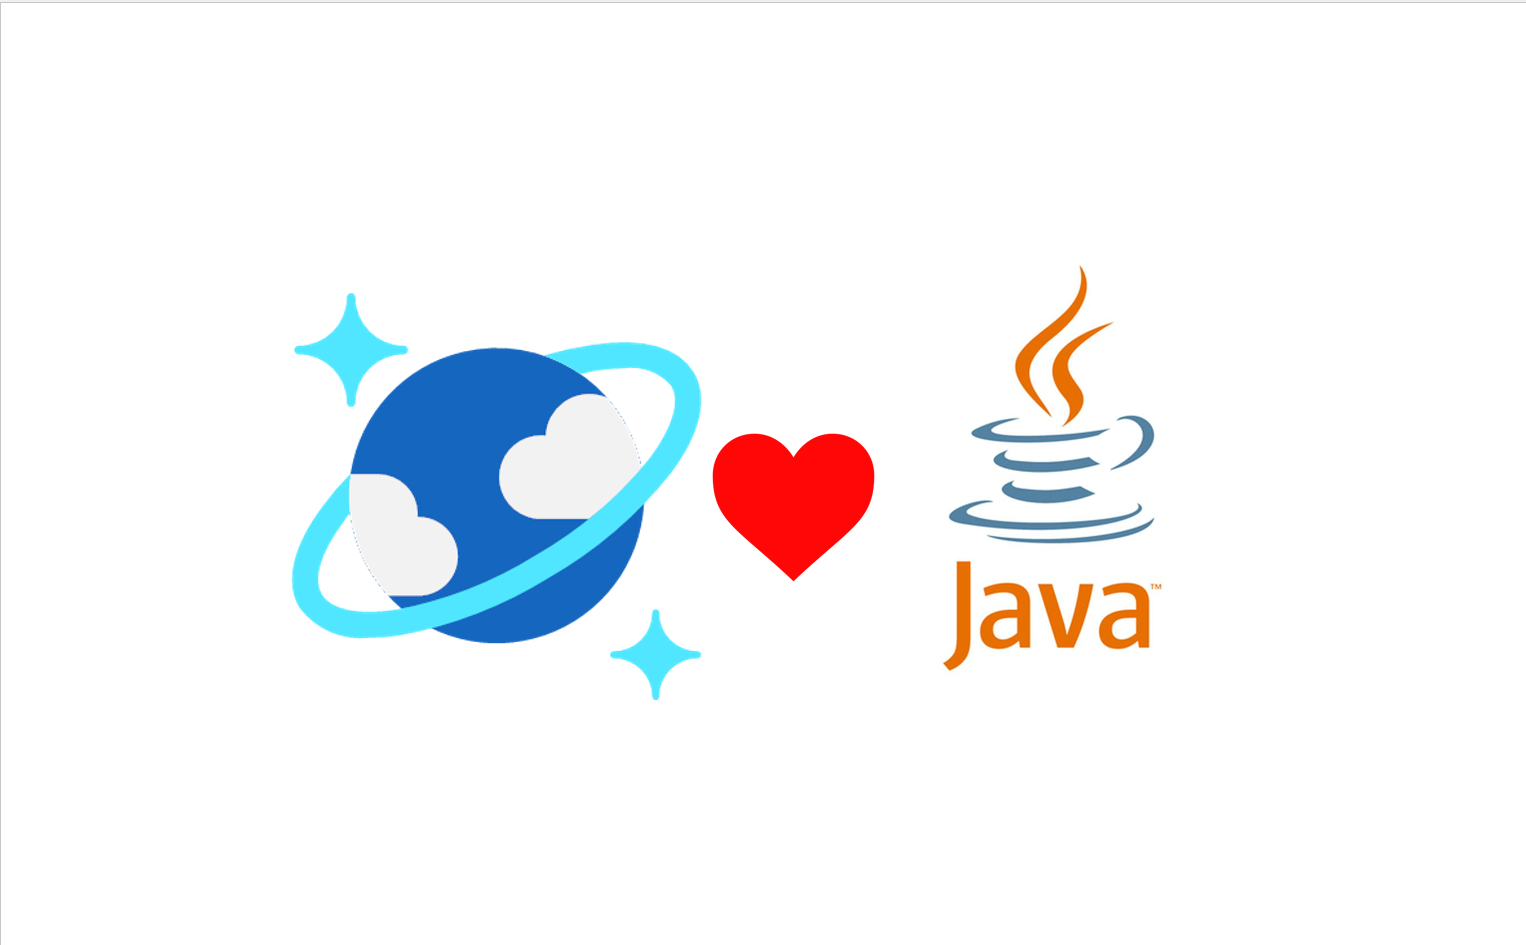 Azure Cosmos DB API for NoSQL – The Java Ecosystem